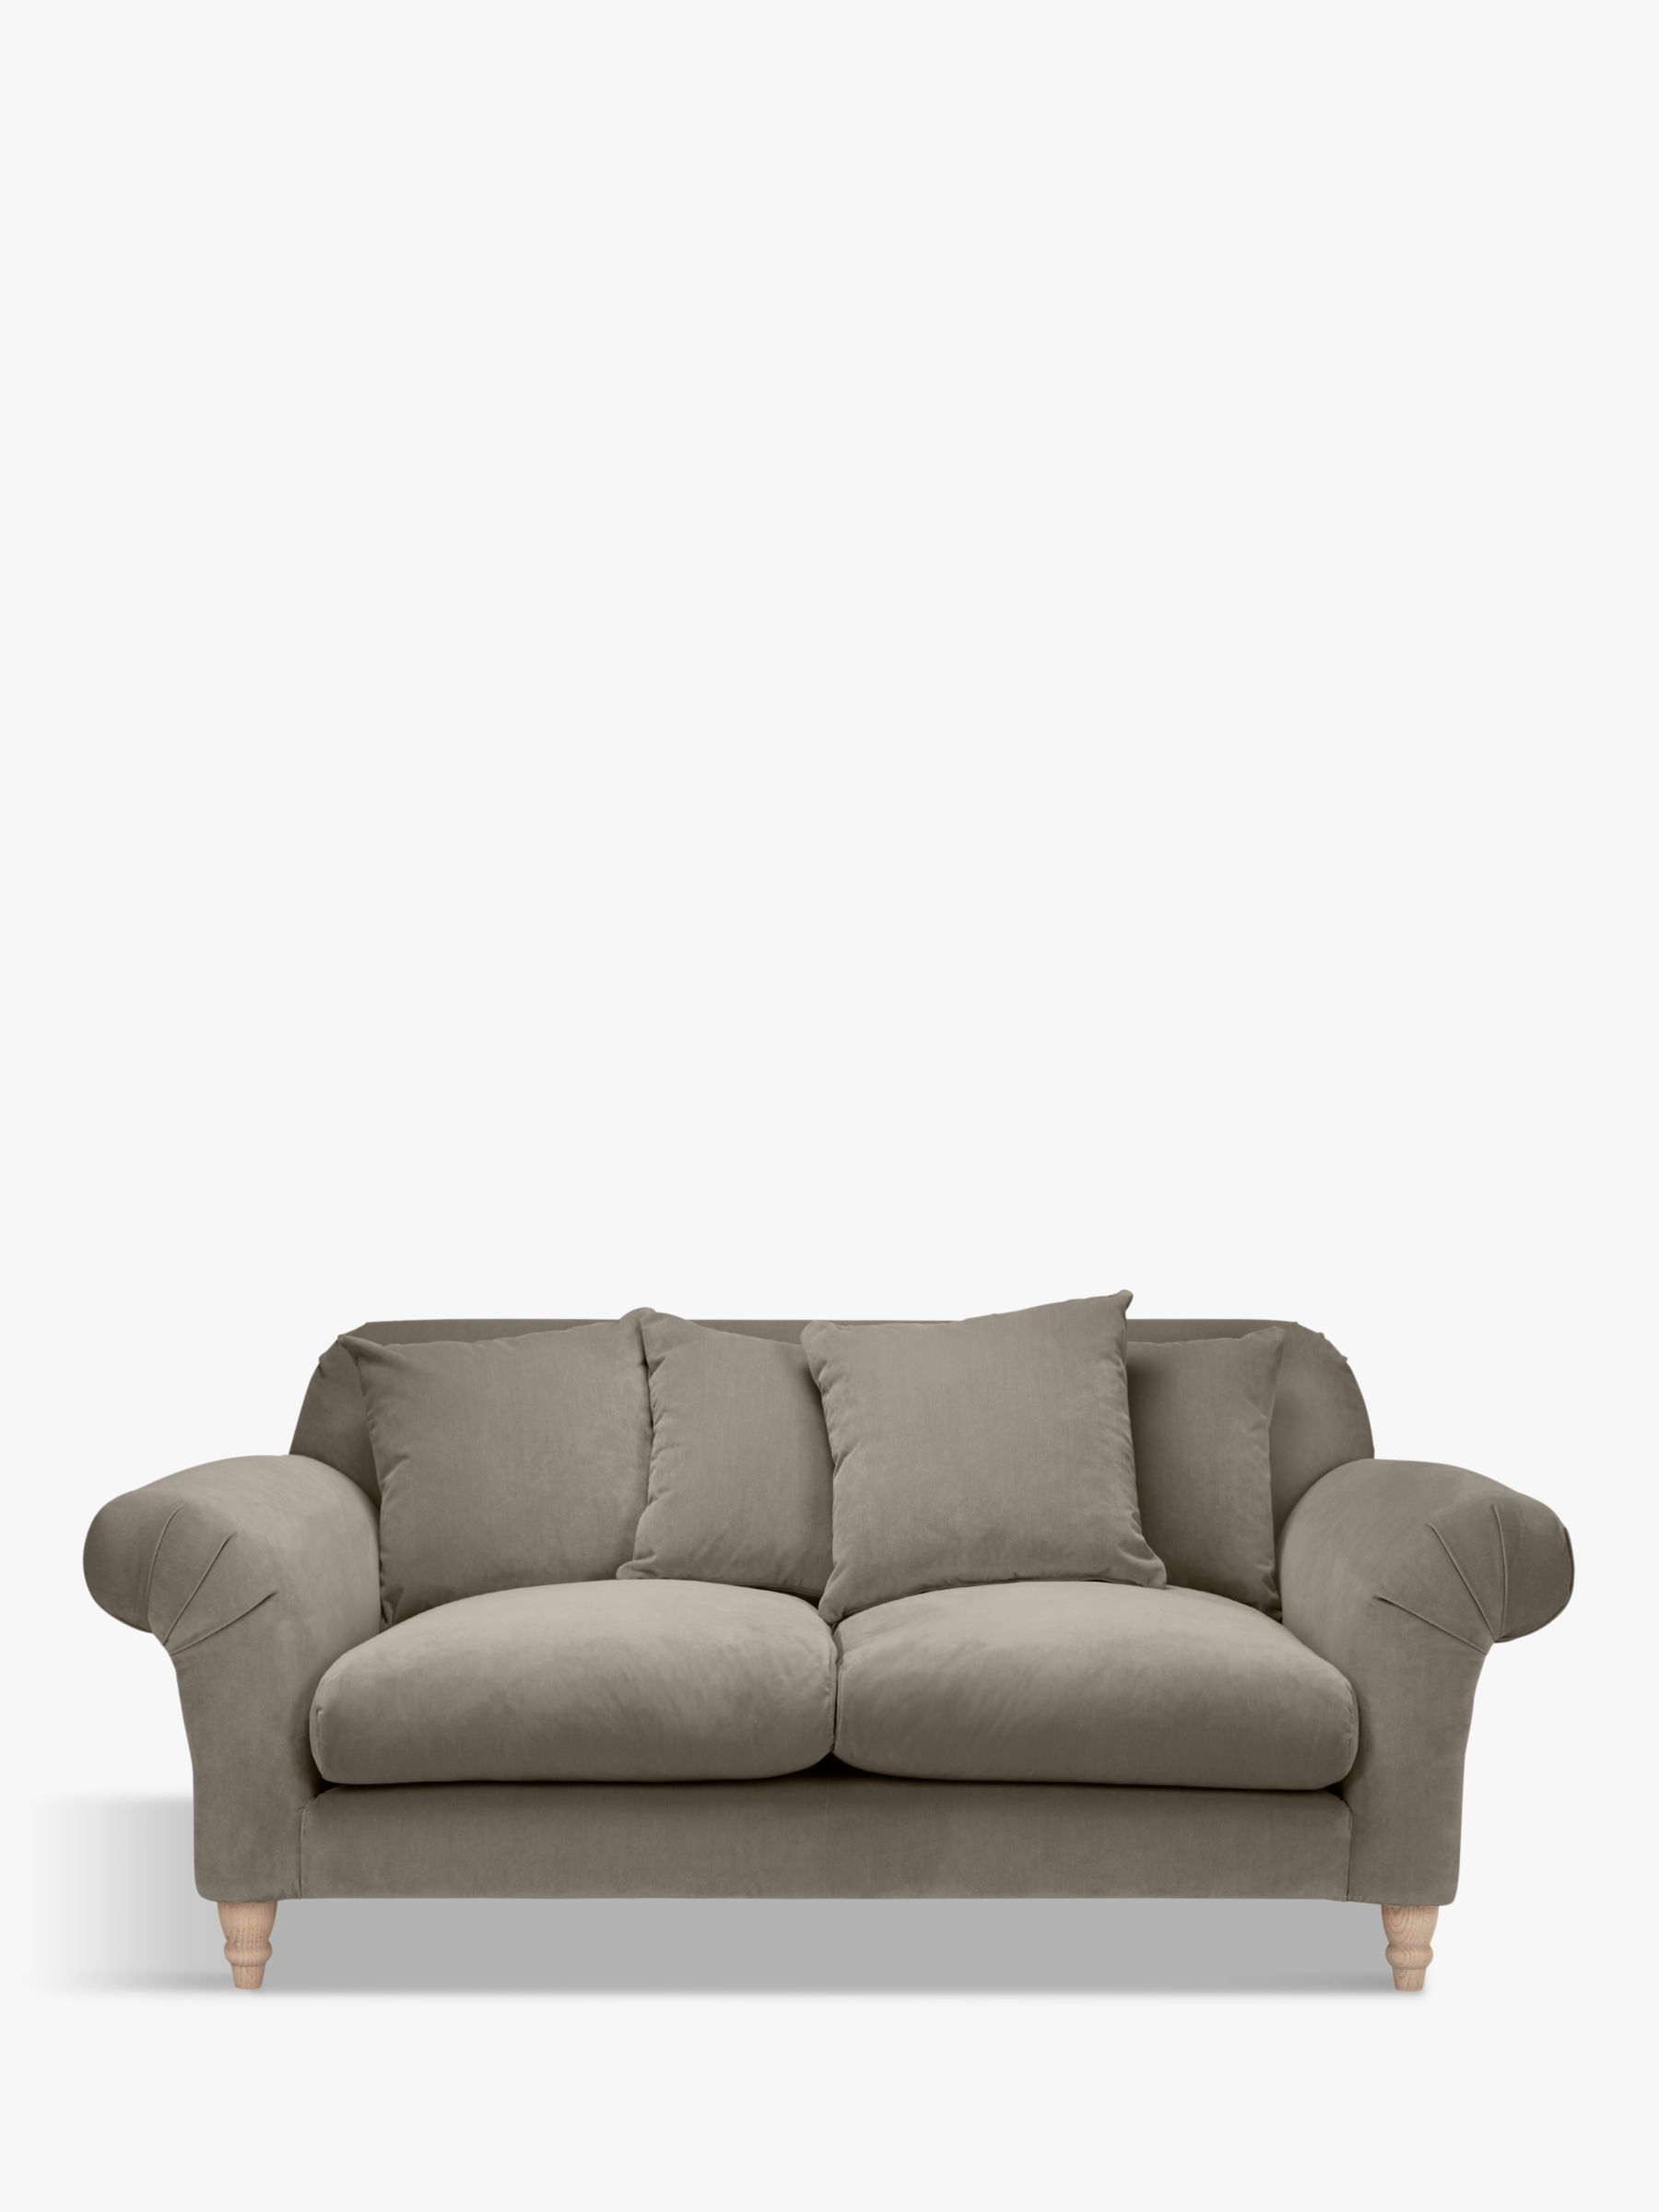 Doodler Medium 2 Seater Sofa by Loaf at John Lewis